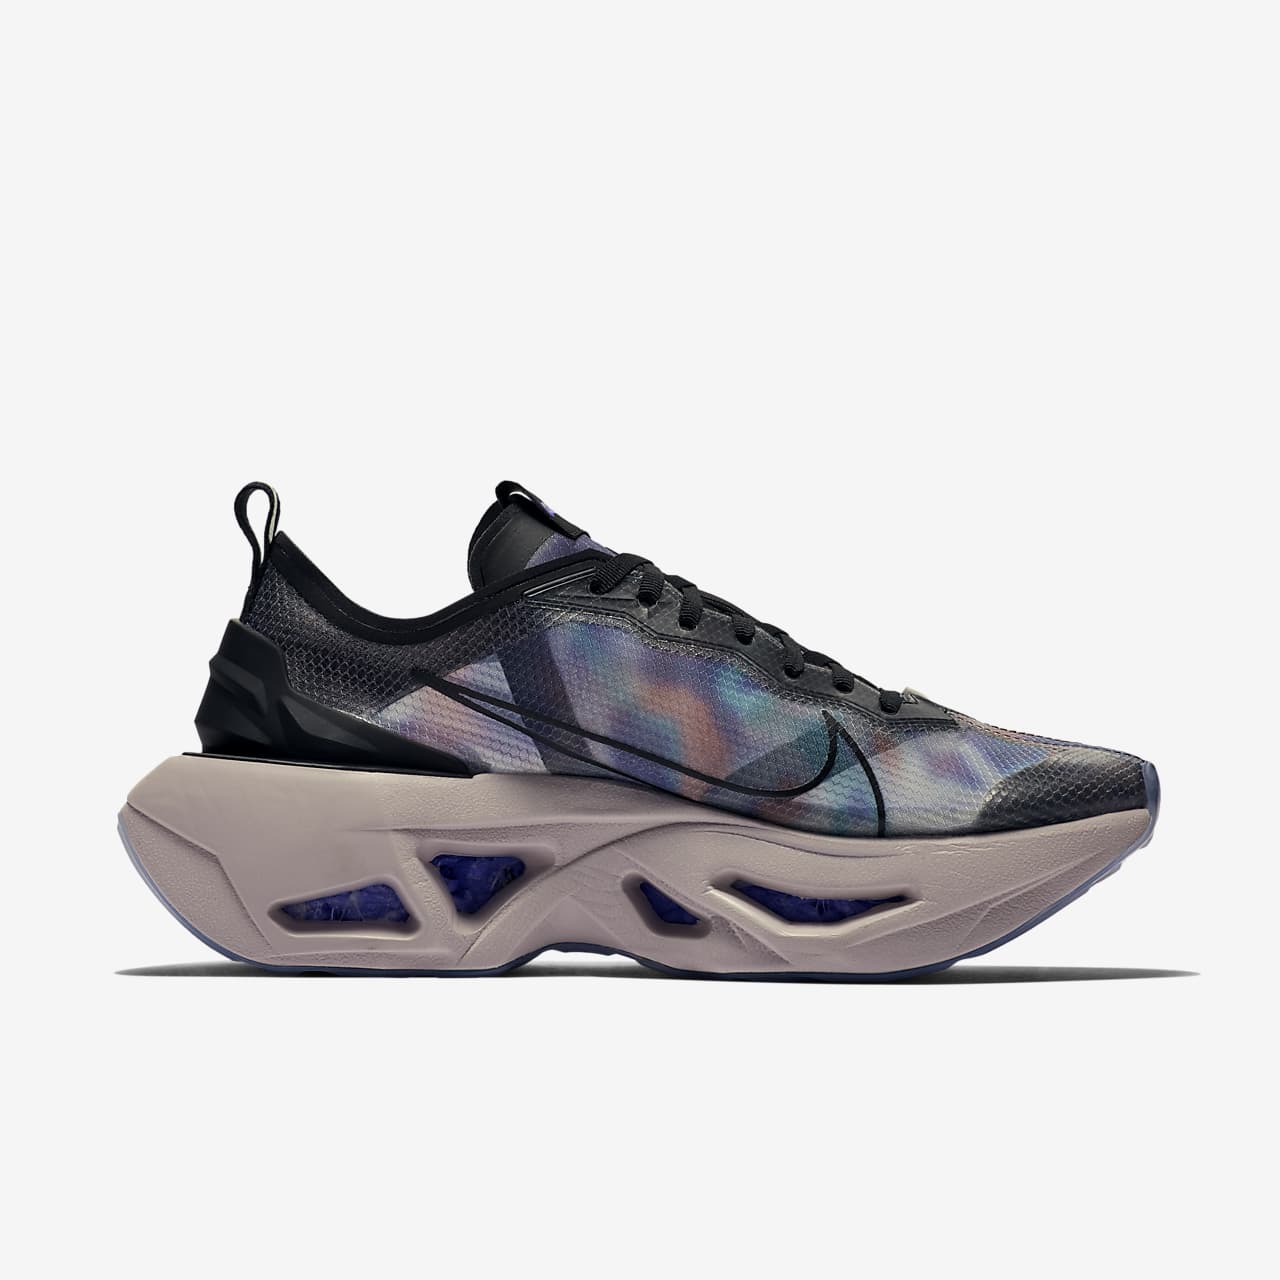 Nike ZoomX Vista Grind SP Women's Shoe 